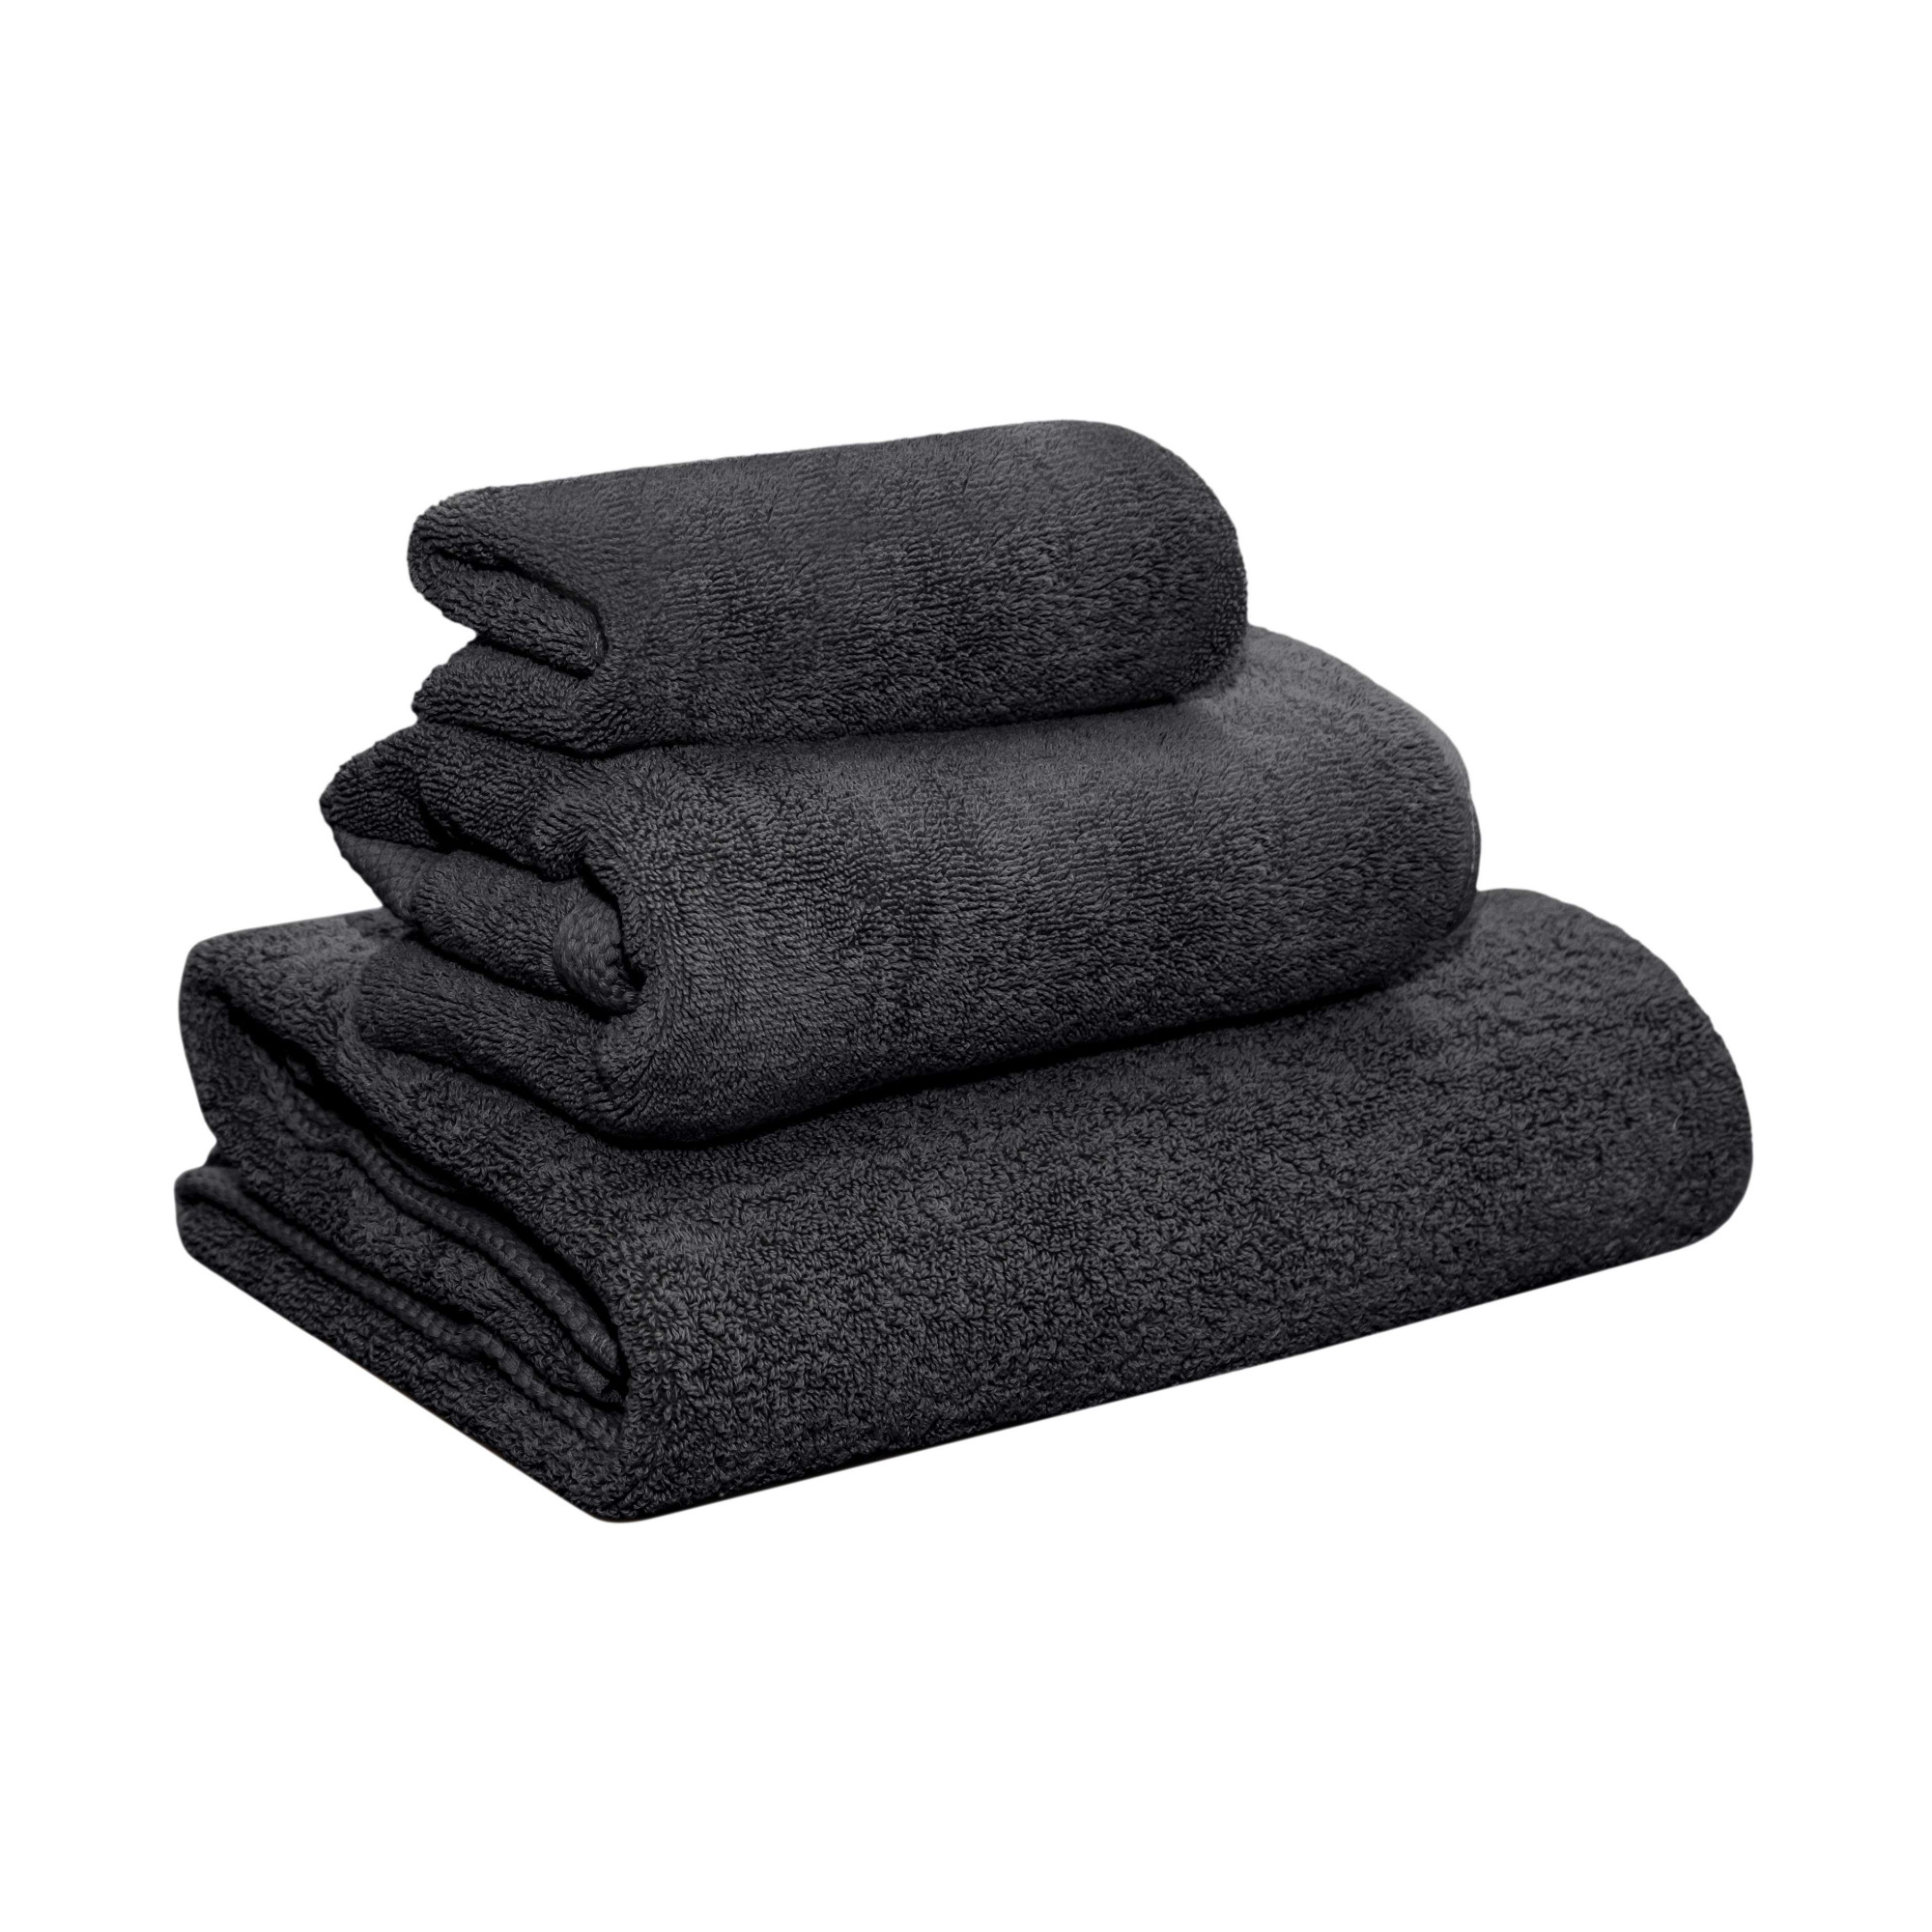 Terry towel 50x90, black, 100% cotton